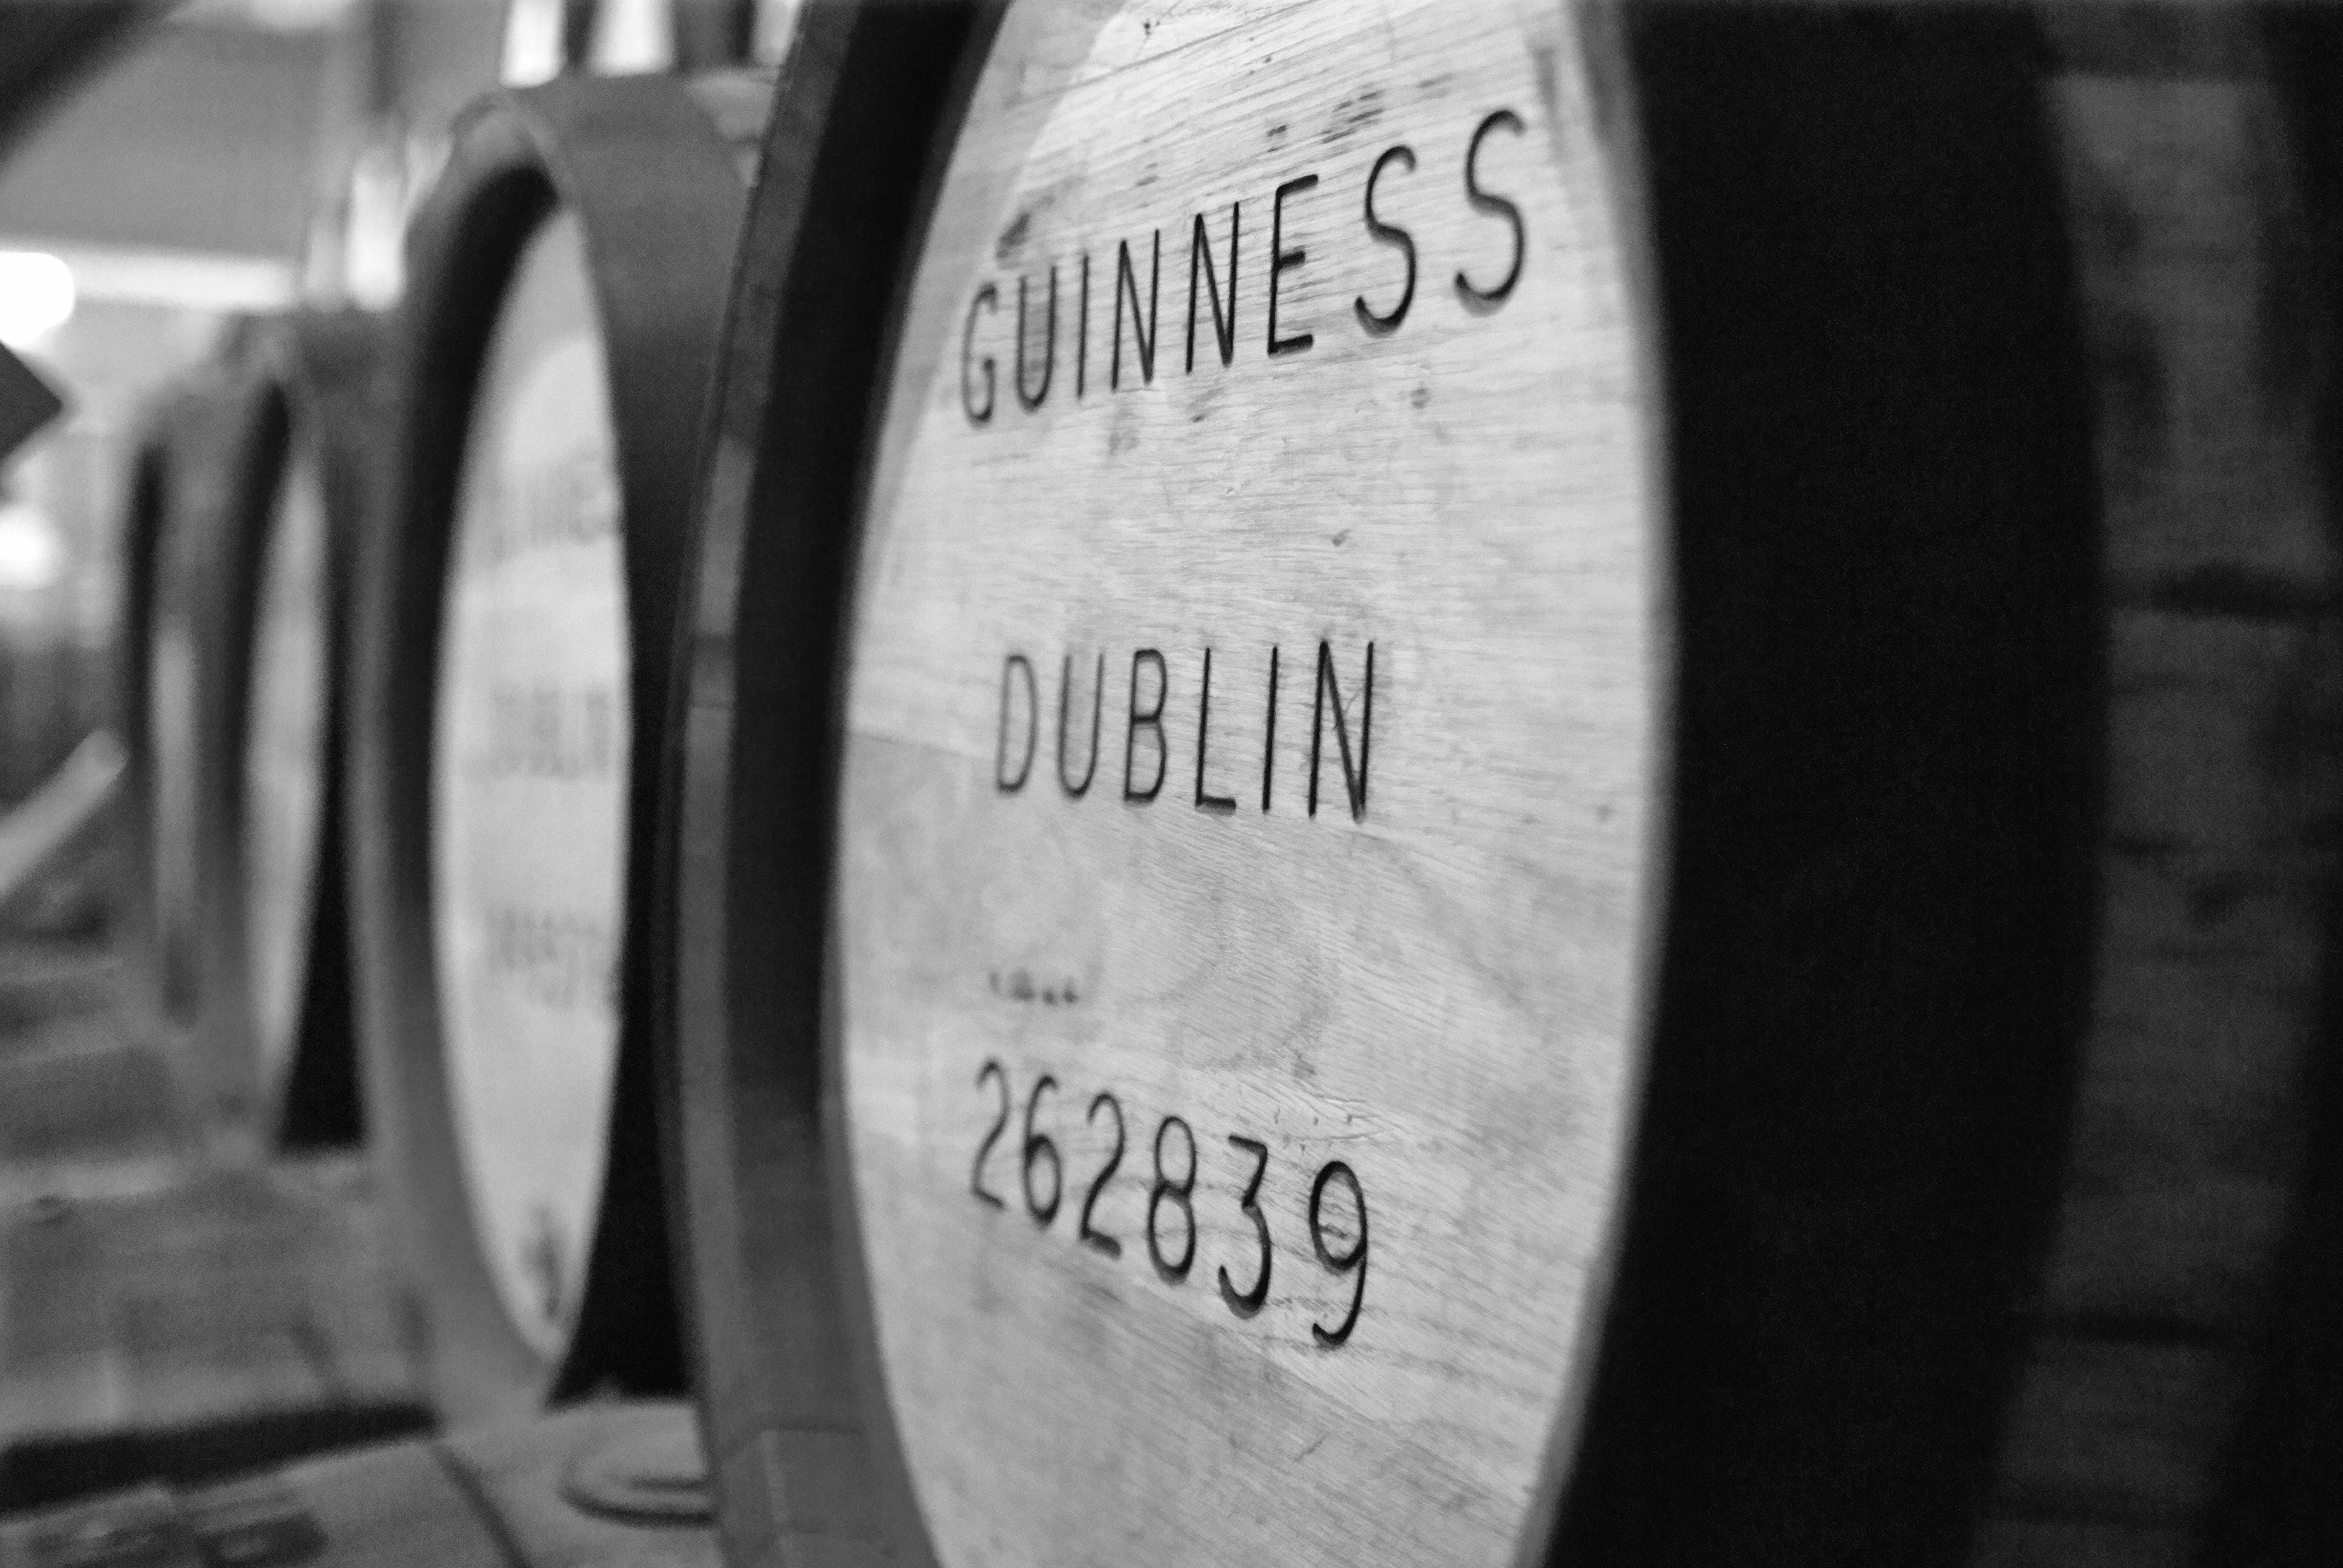 Barrels at the guinness brewery museum in Dublin, Ireland |sebastiangora (Adobe Stock)